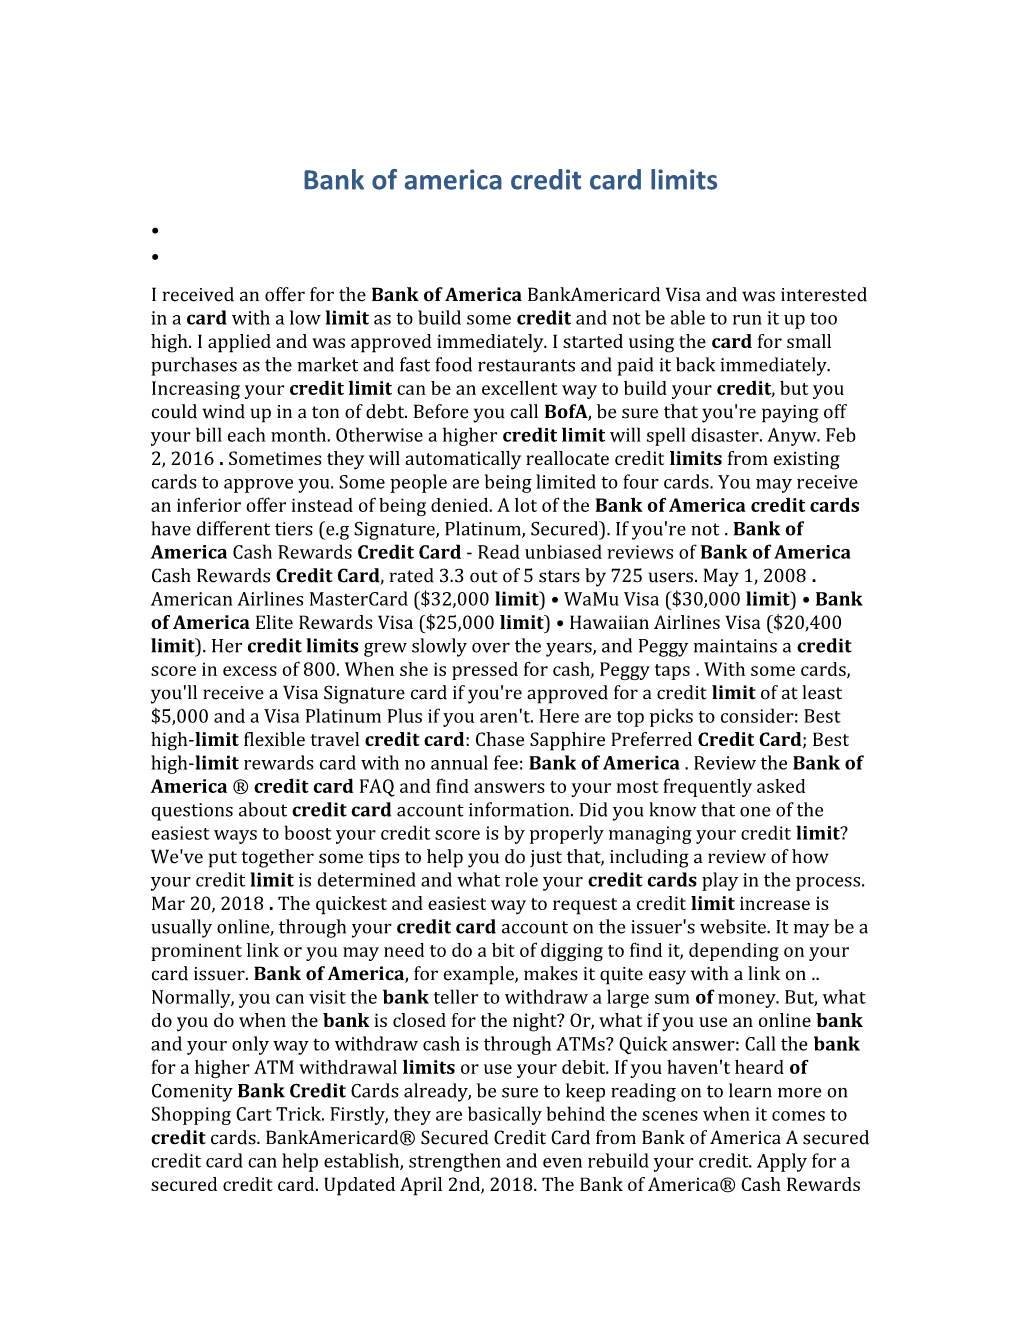 Bank of America Credit Card Limits